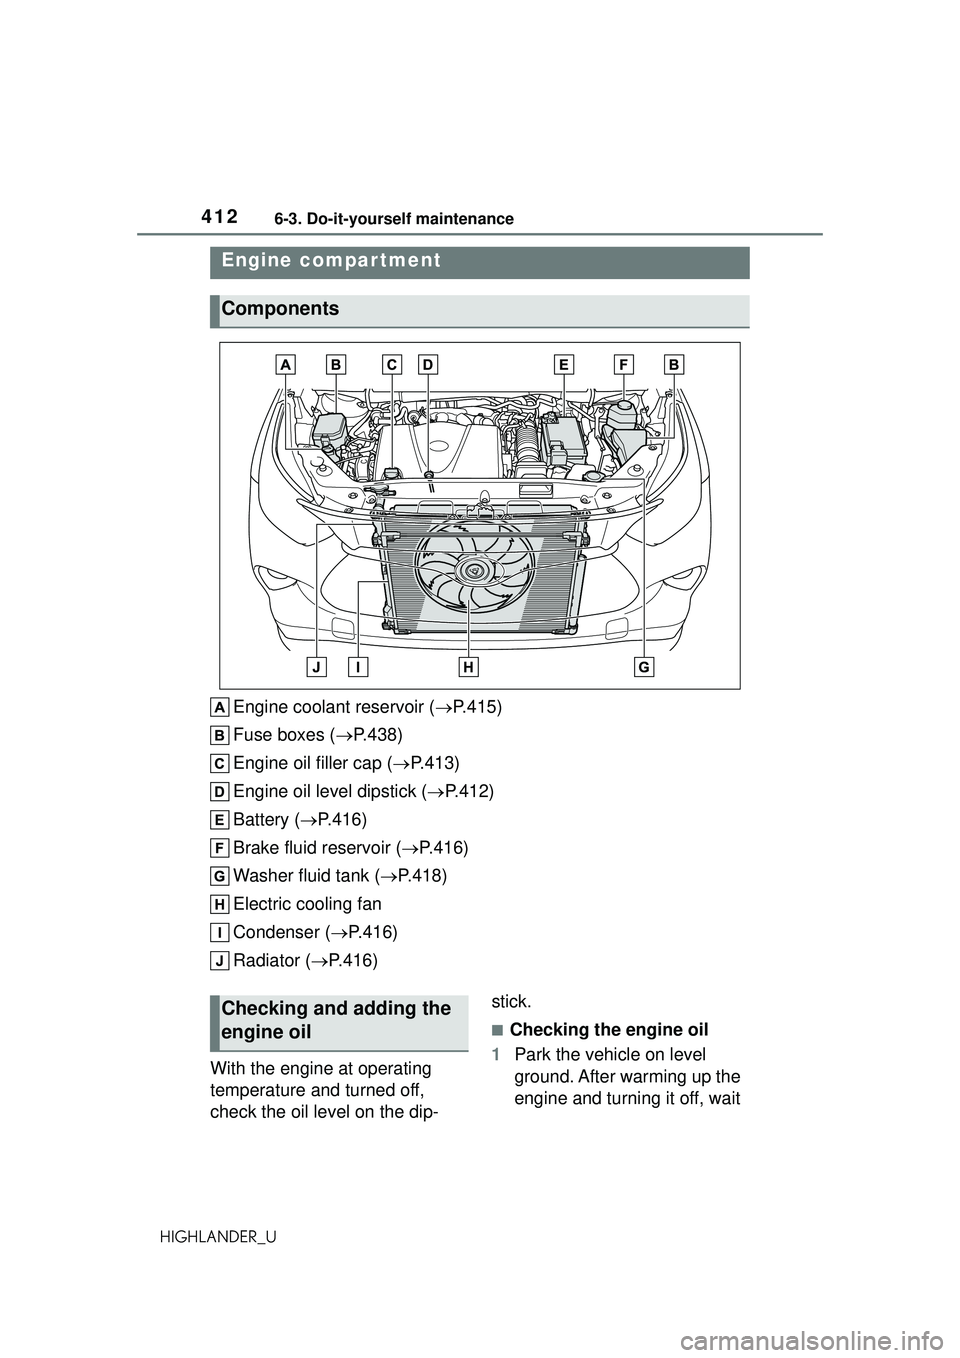 TOYOTA HIGHLANDER 2021  Owners Manual (in English) 4126-3. Do-it-yourself maintenance
HIGHLANDER_U
Engine coolant reservoir (P.415)
Fuse boxes ( P.438)
Engine oil filler cap ( P.413)
Engine oil level dipstick ( P.412)
Battery ( P.416)
B